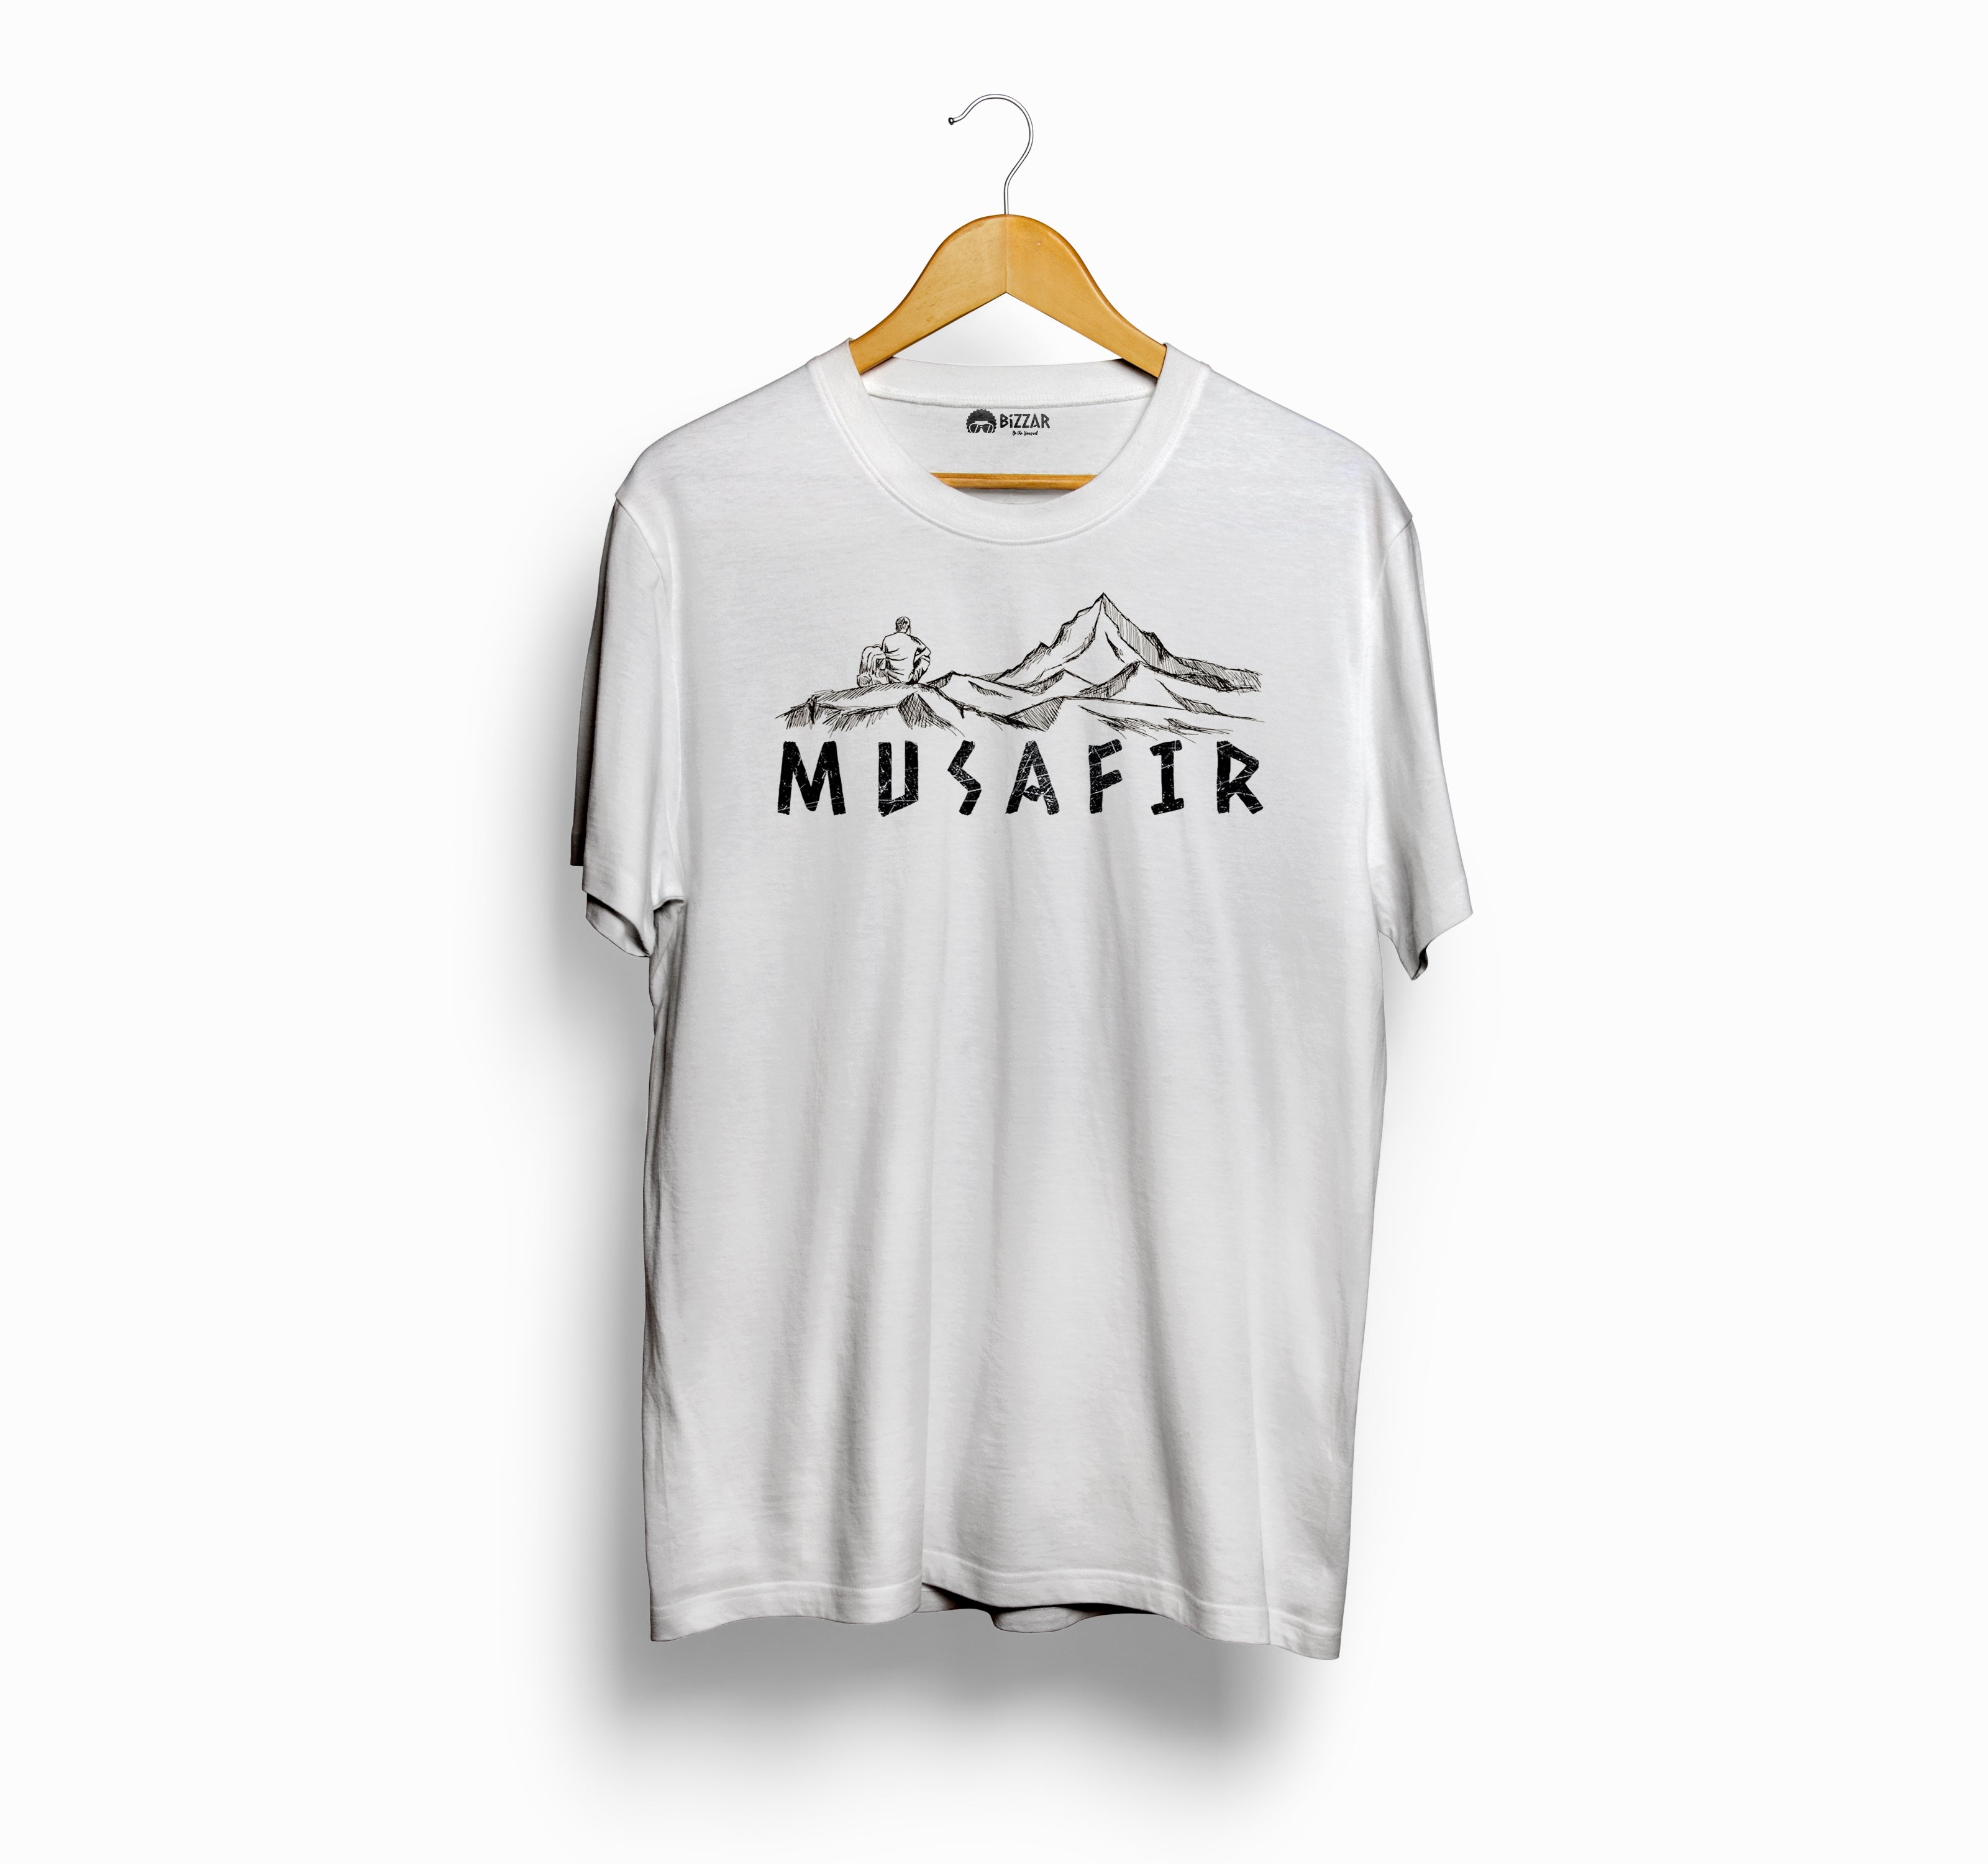 Bizzar's Musafir White T-Shirt